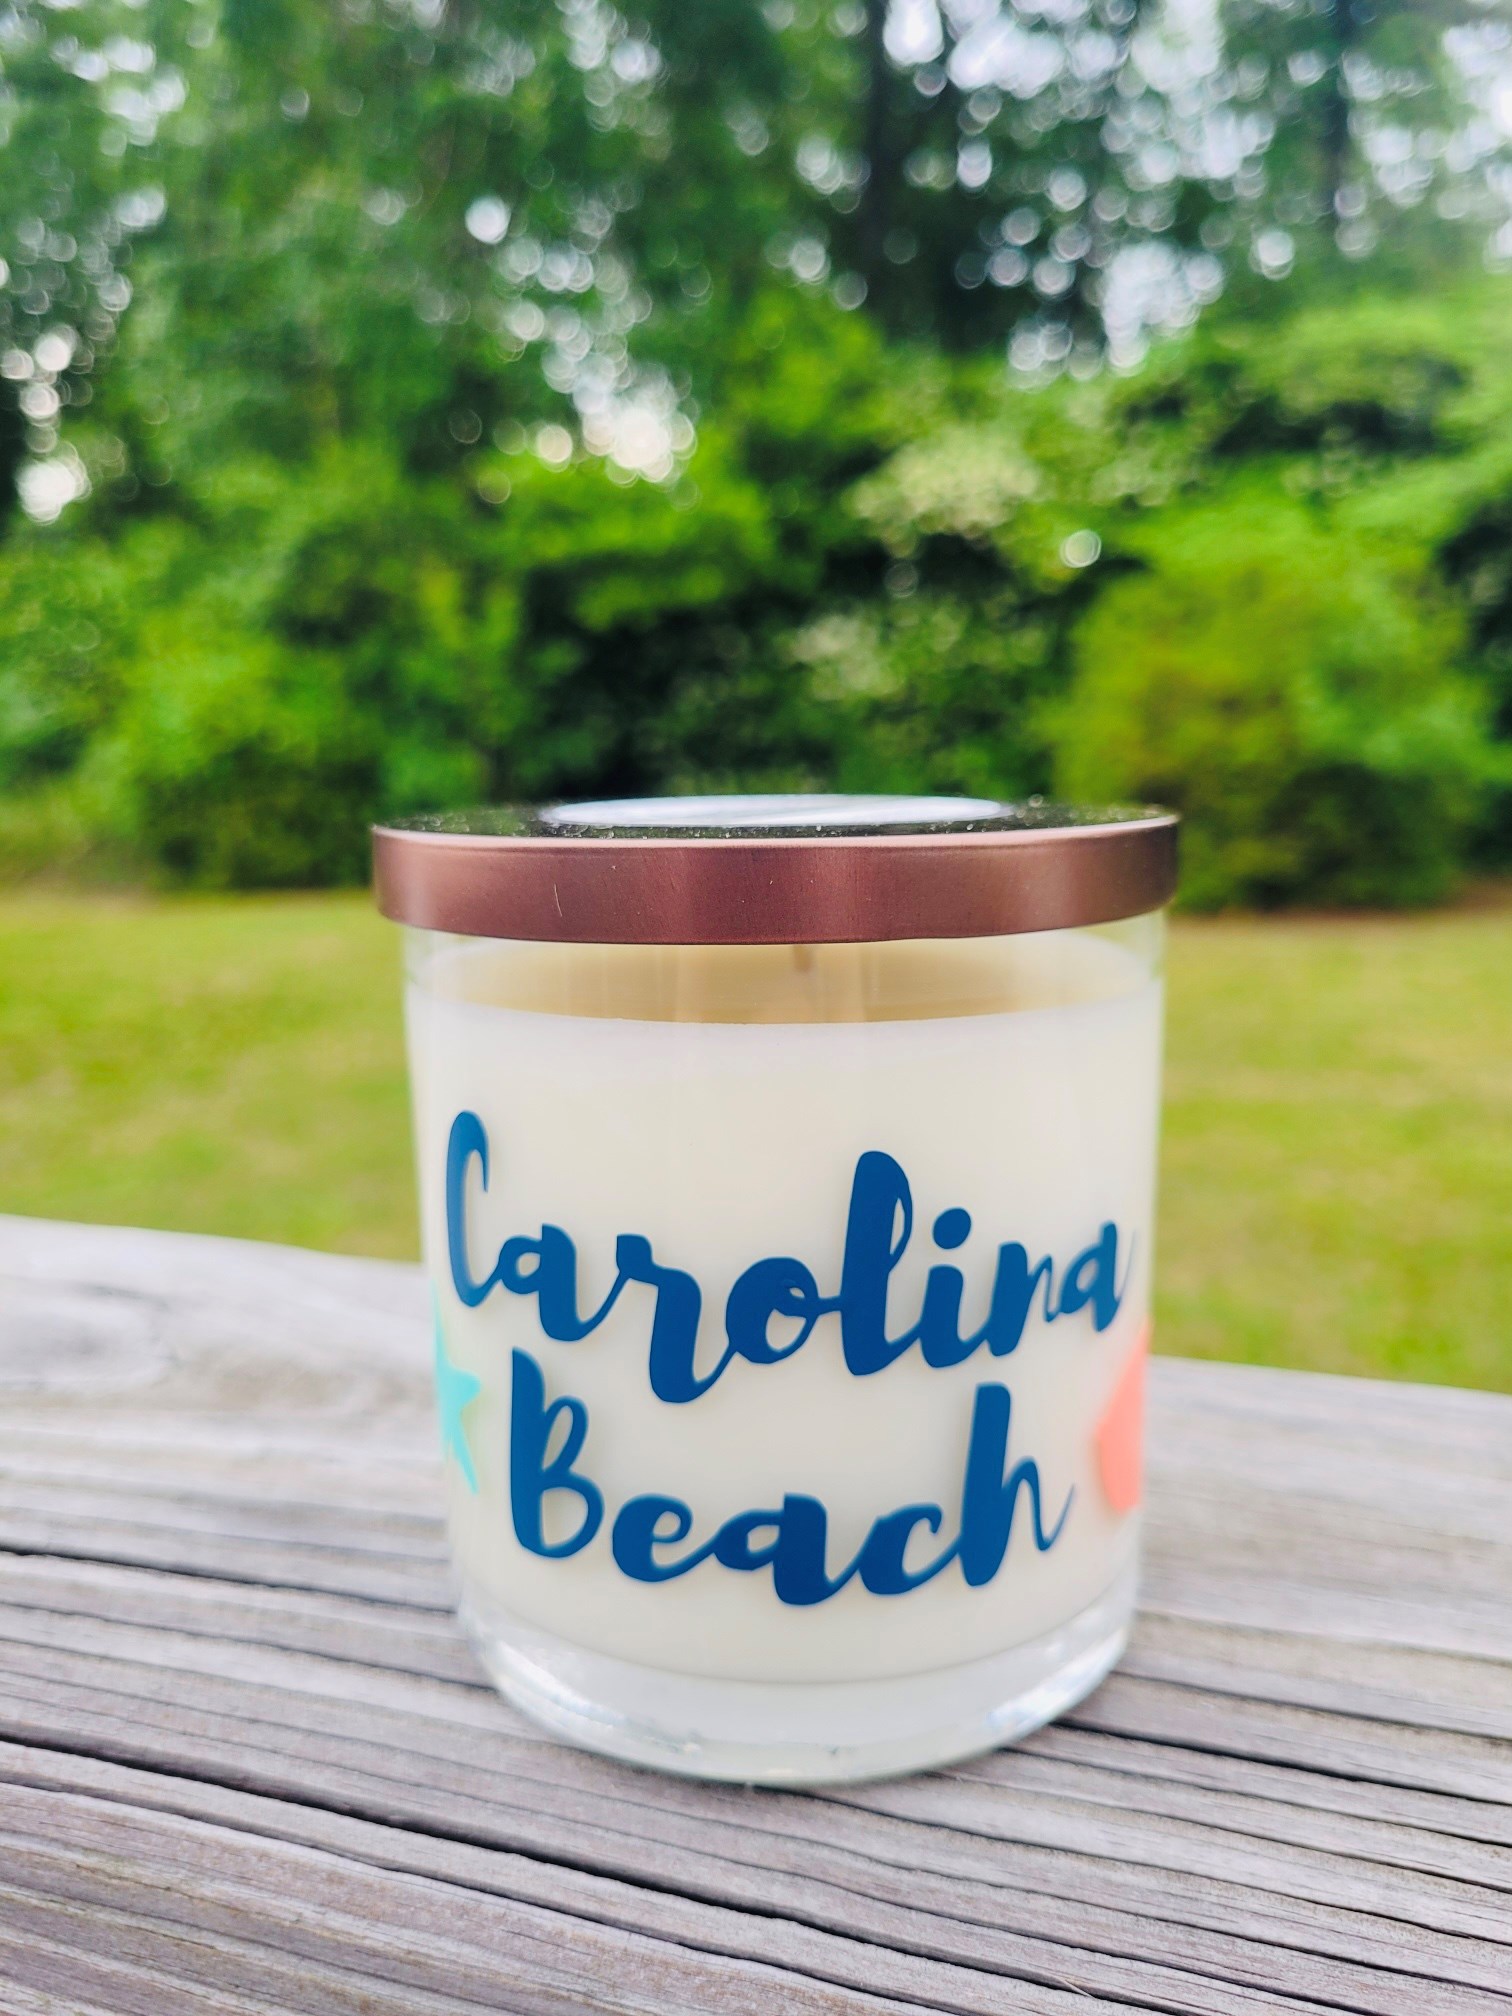  Carolina Beach candle